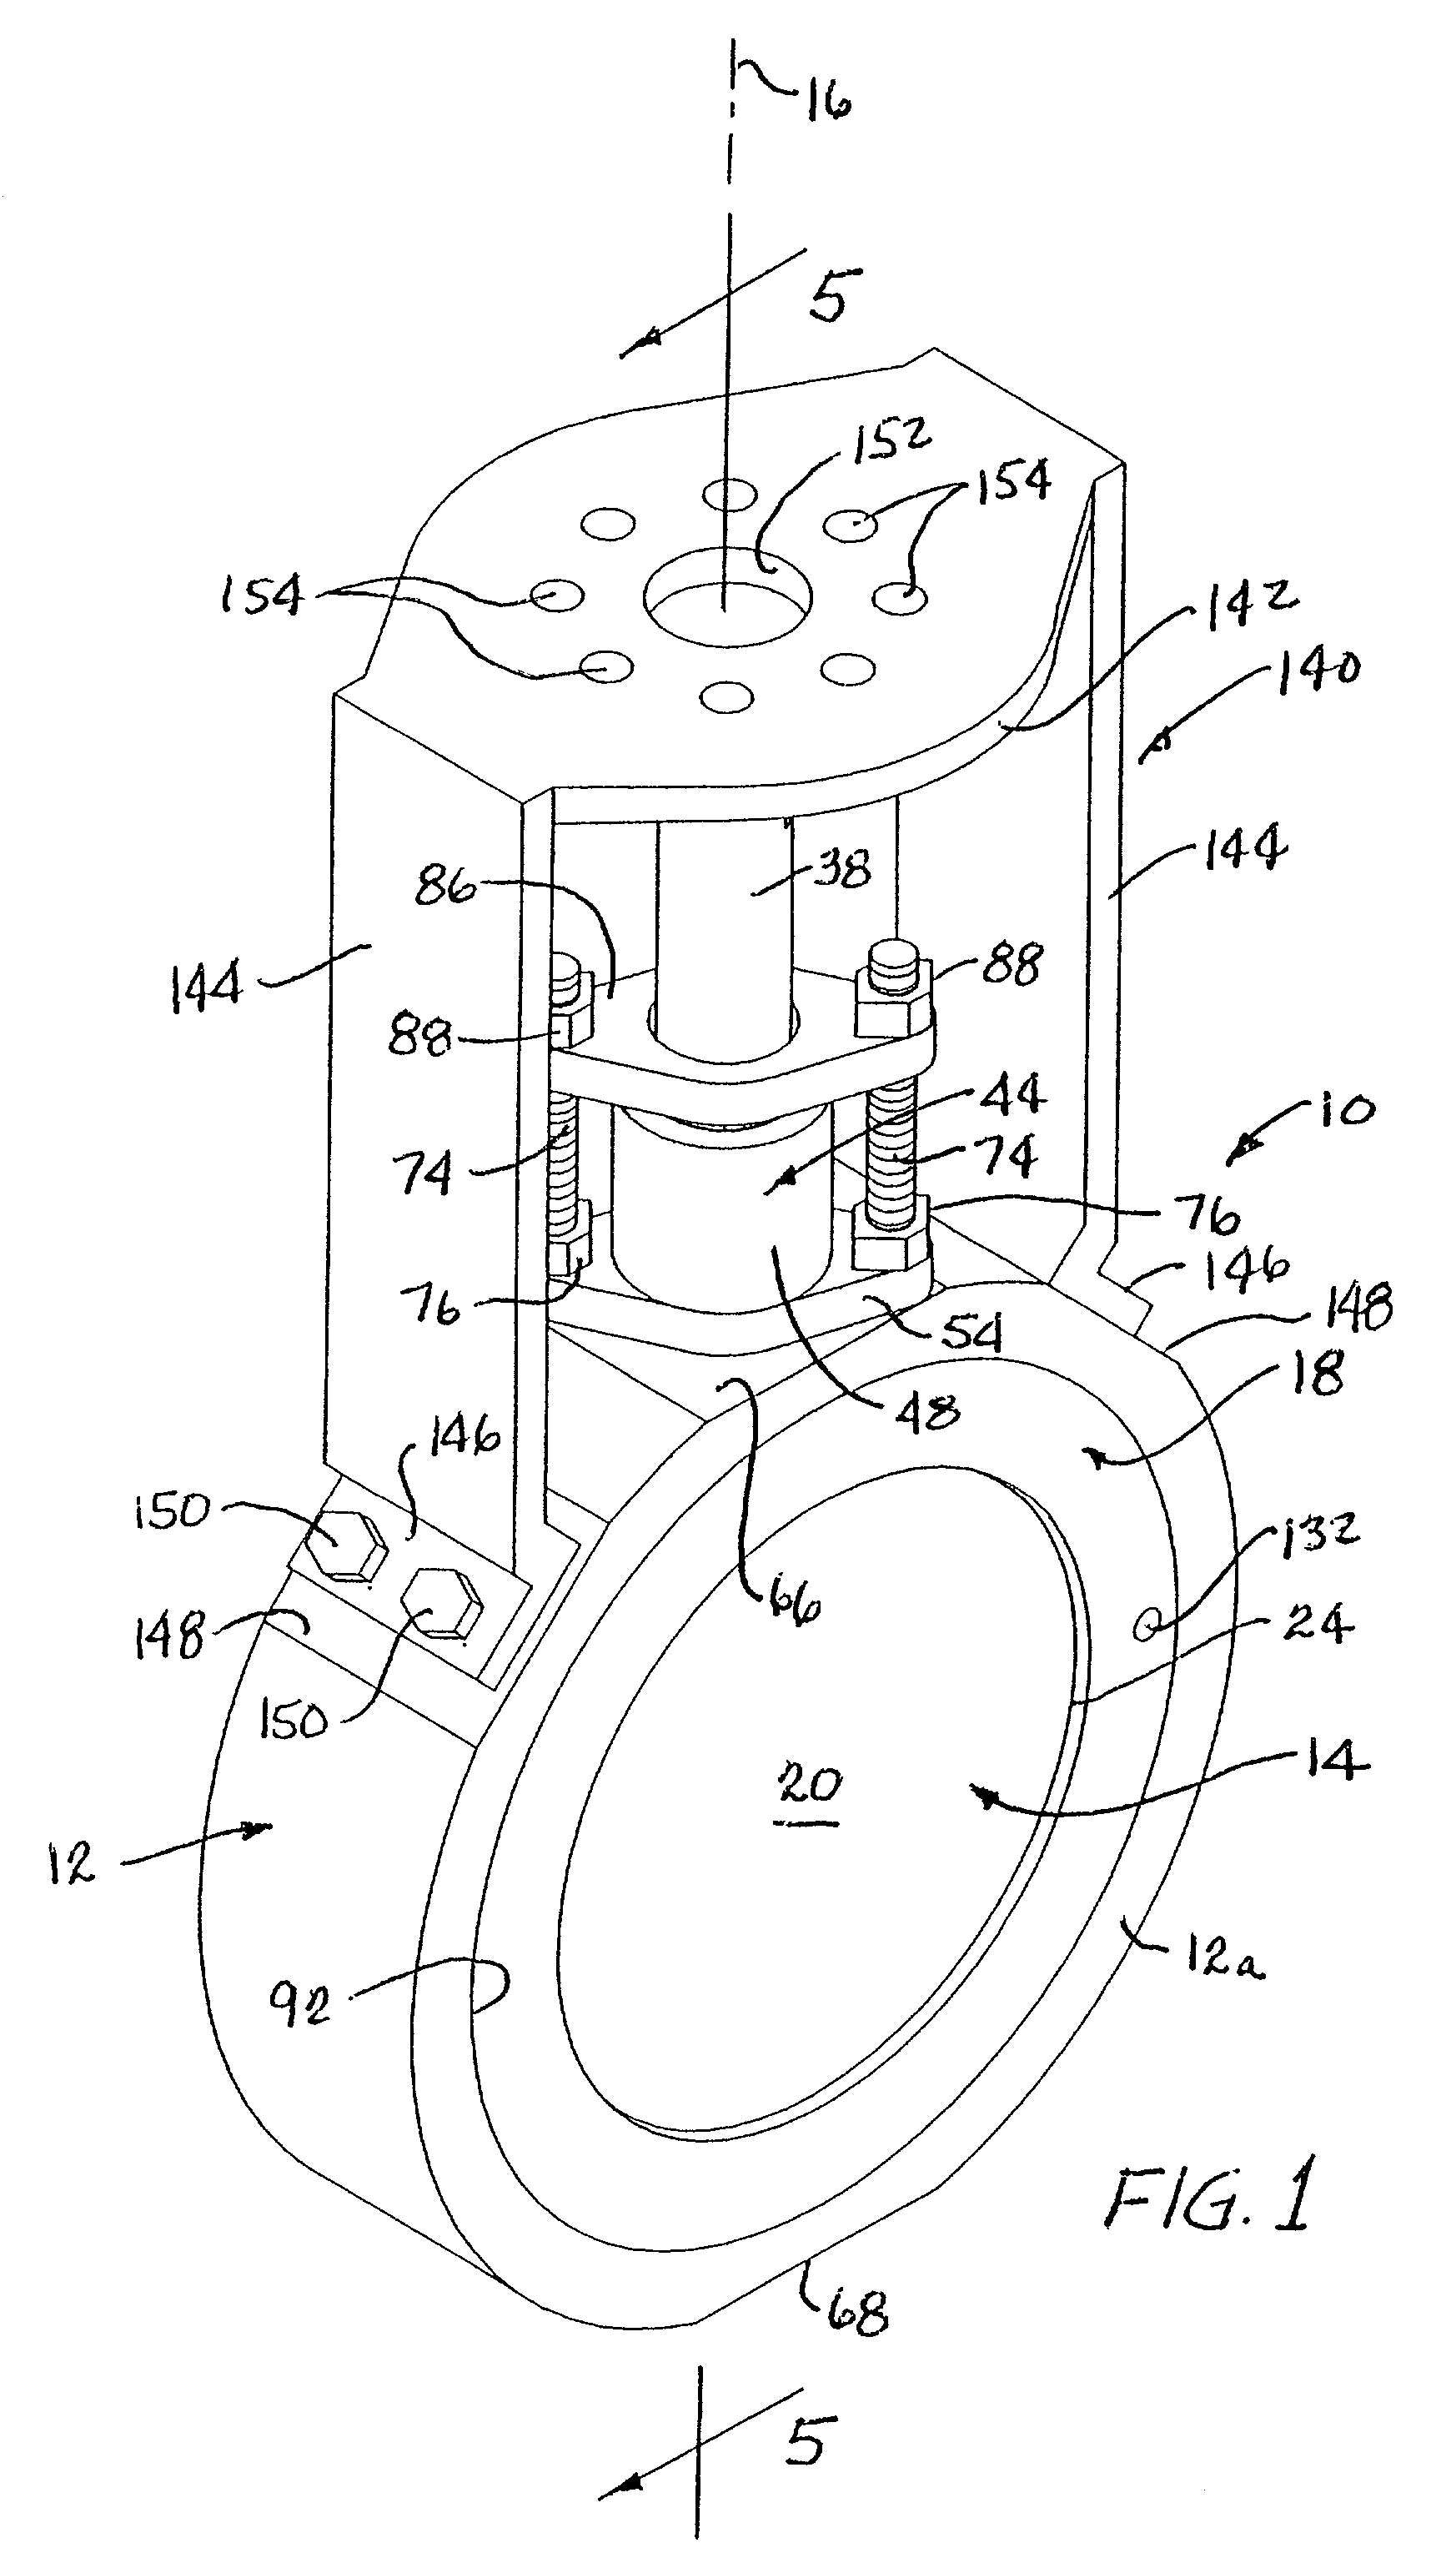 Rotary valve apparatus and associated methods